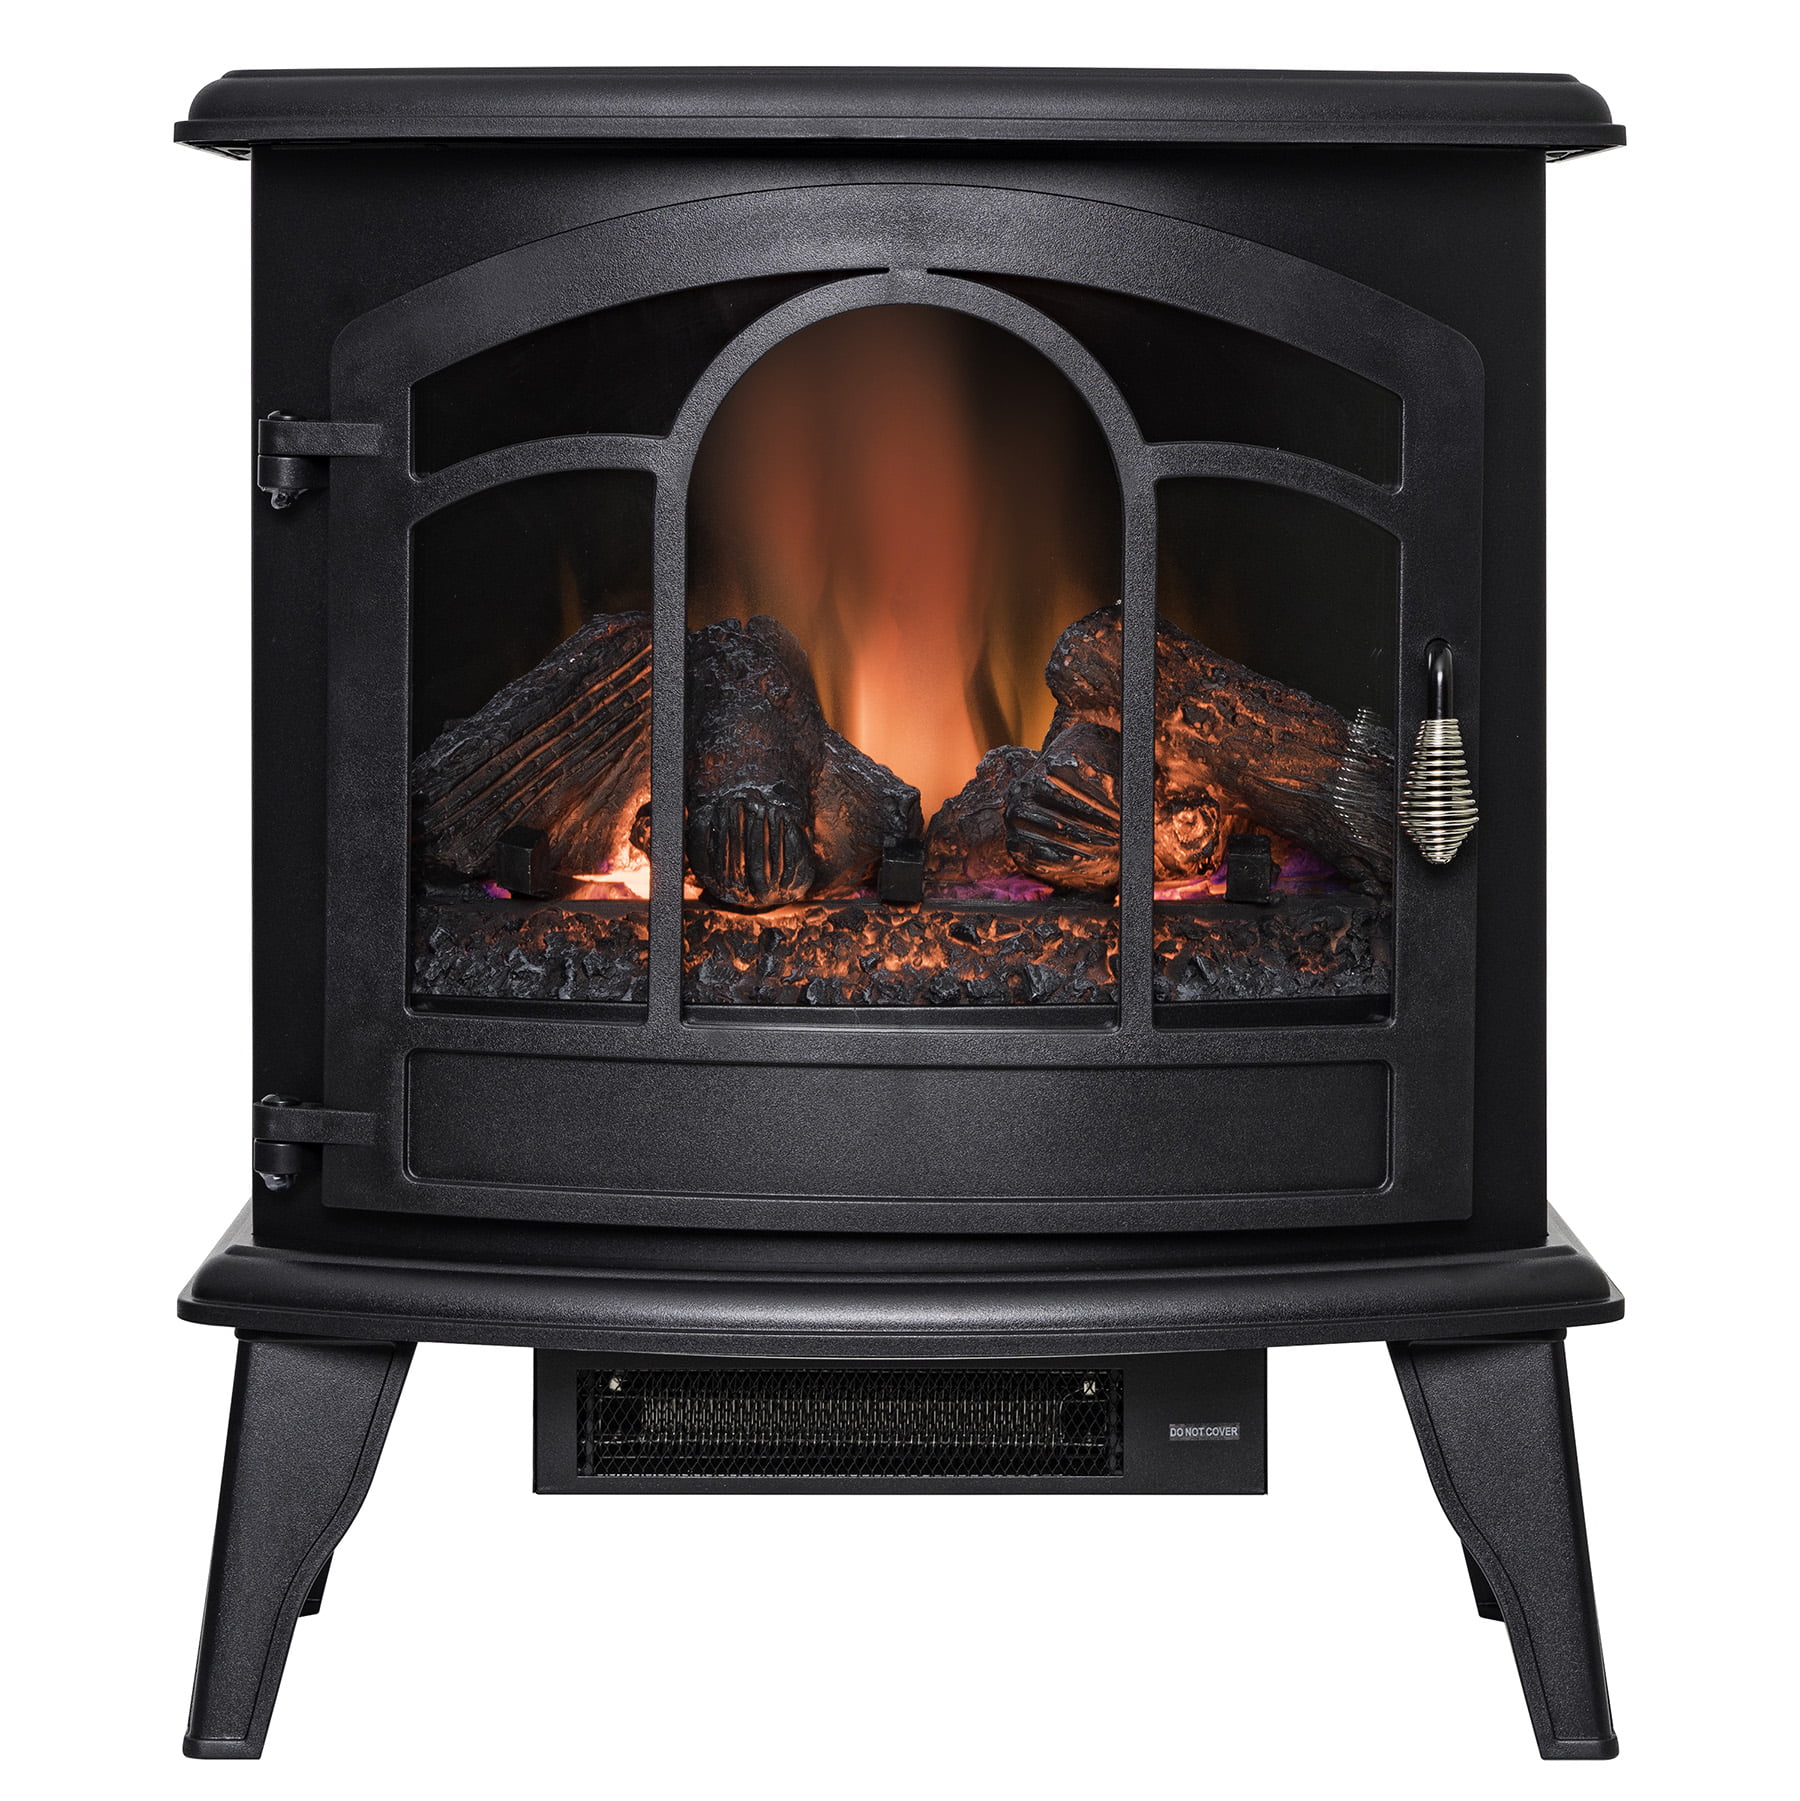 AKDY FP0085 20" Freestanding Portable Electric Fireplace Black 3D